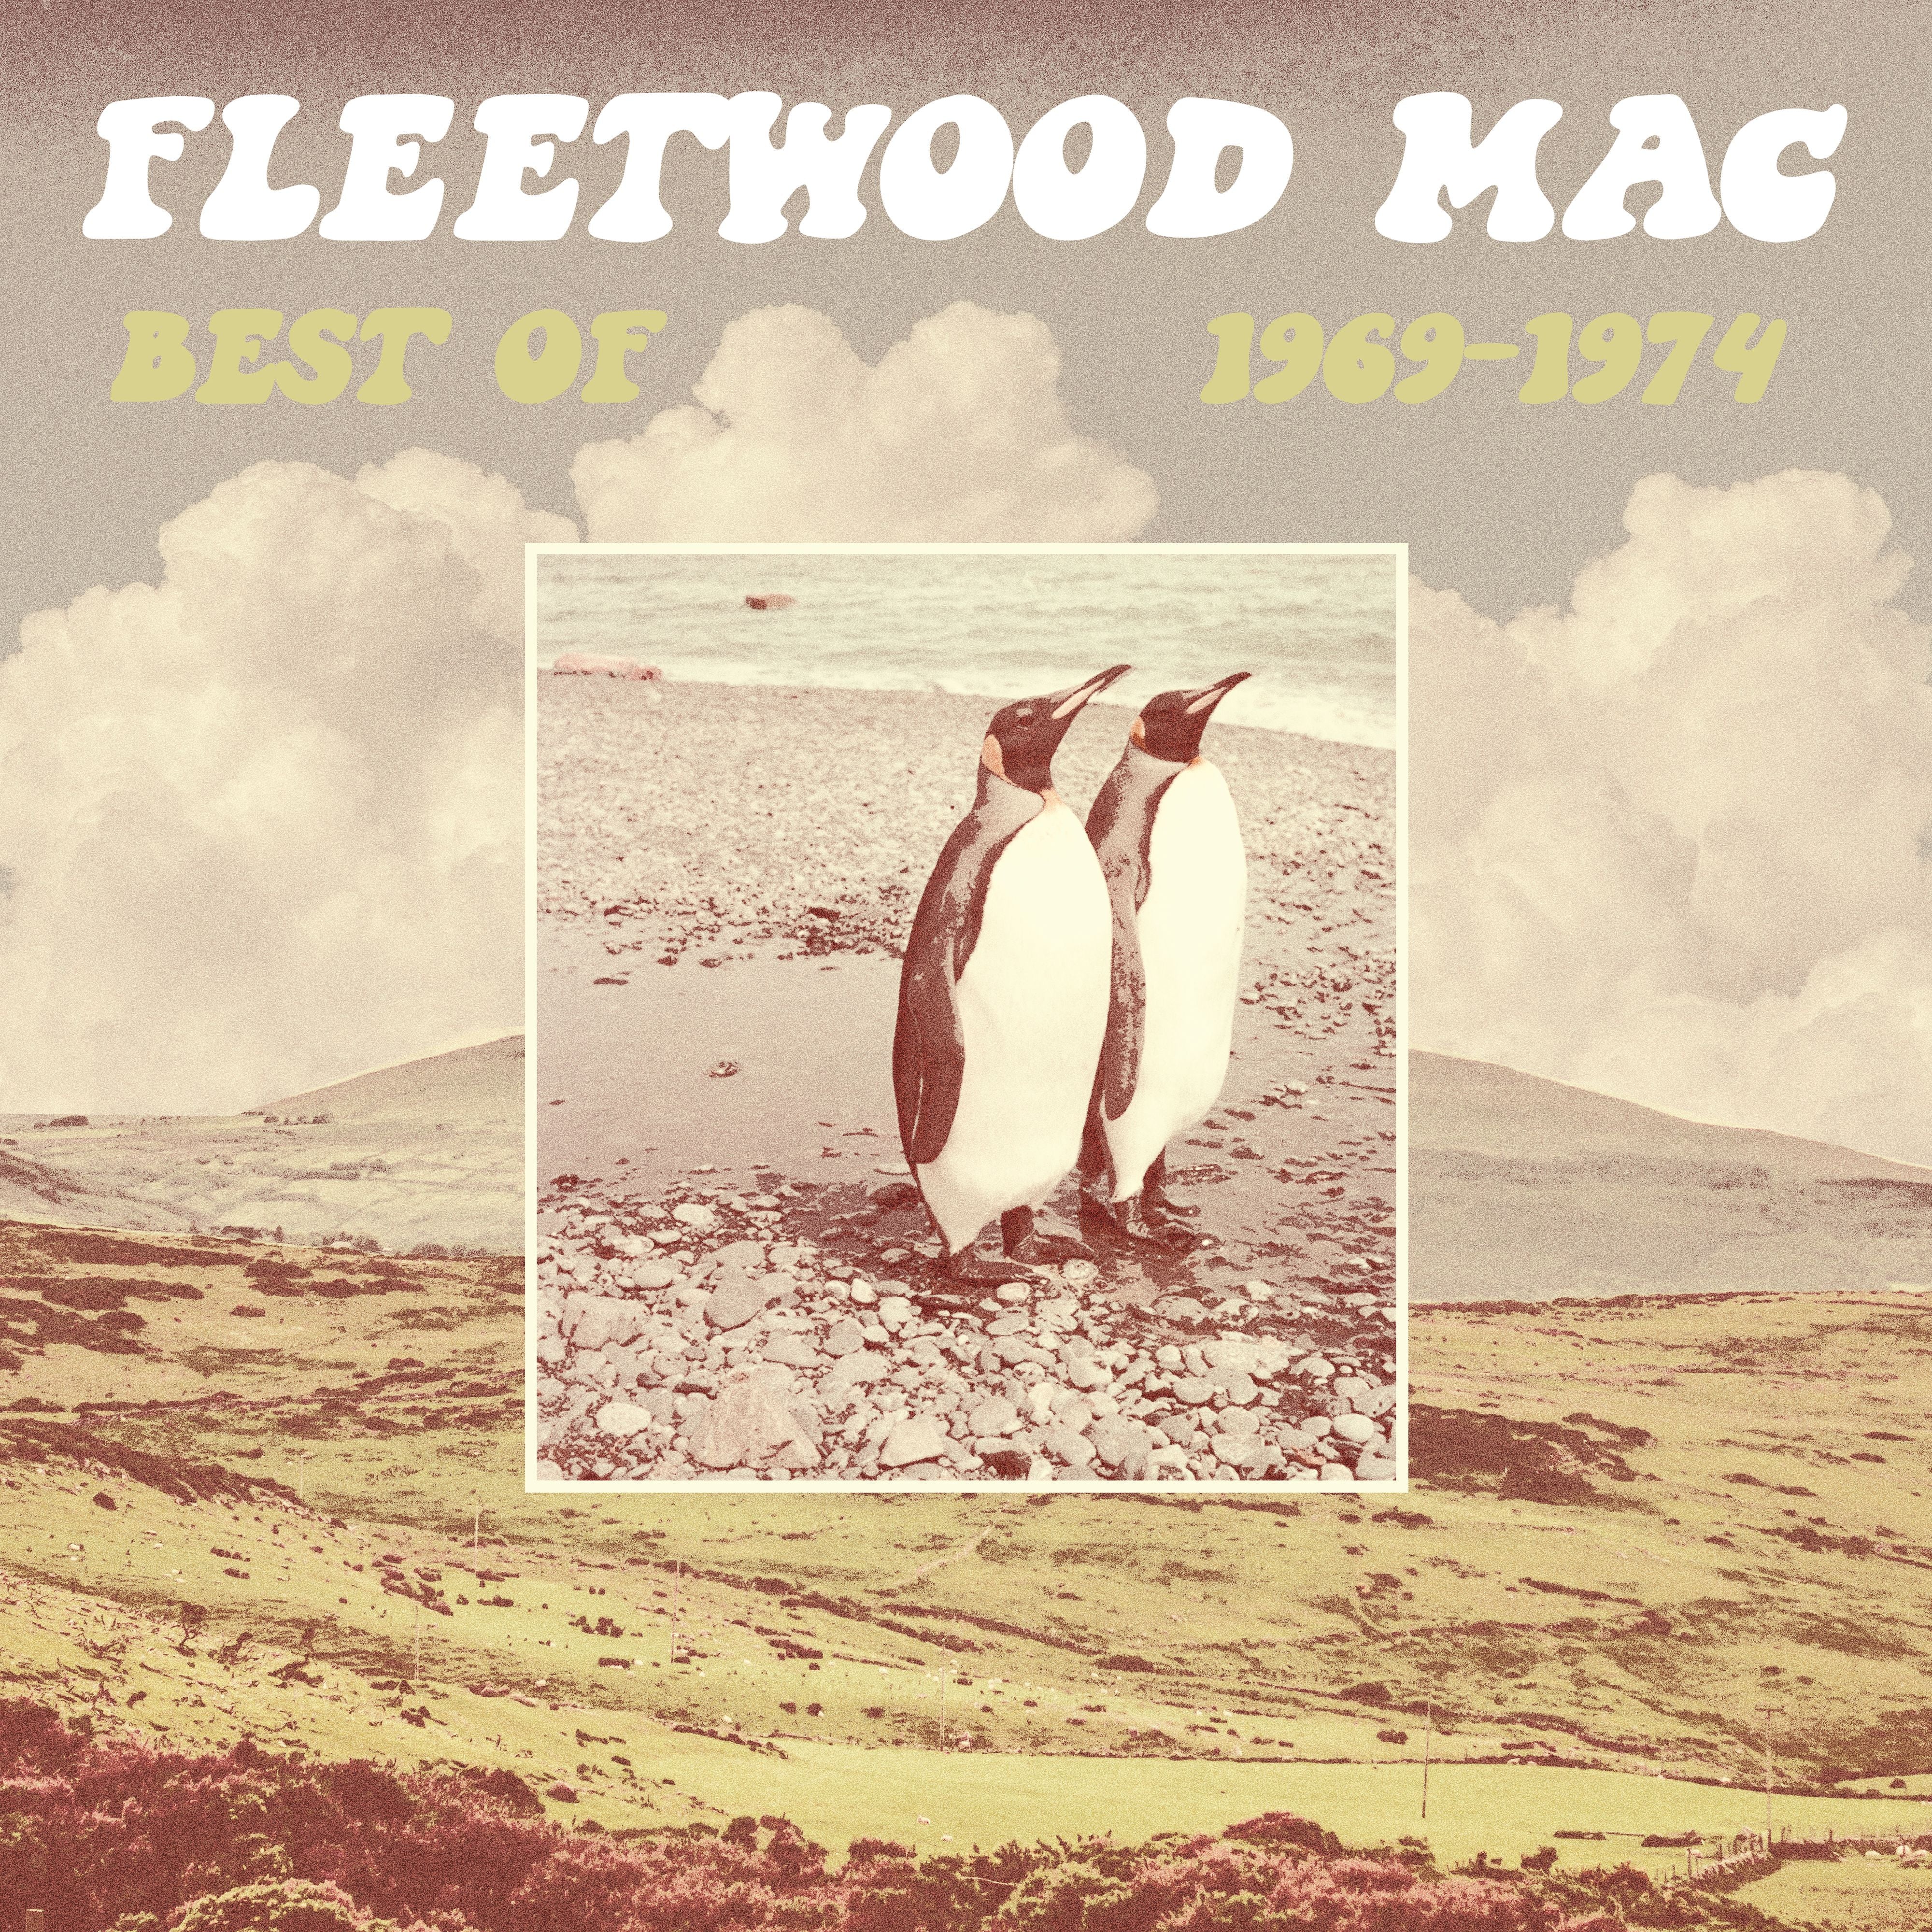 Fleetwood Mac - Best of Fleetwood Mac (1969-1974): CD